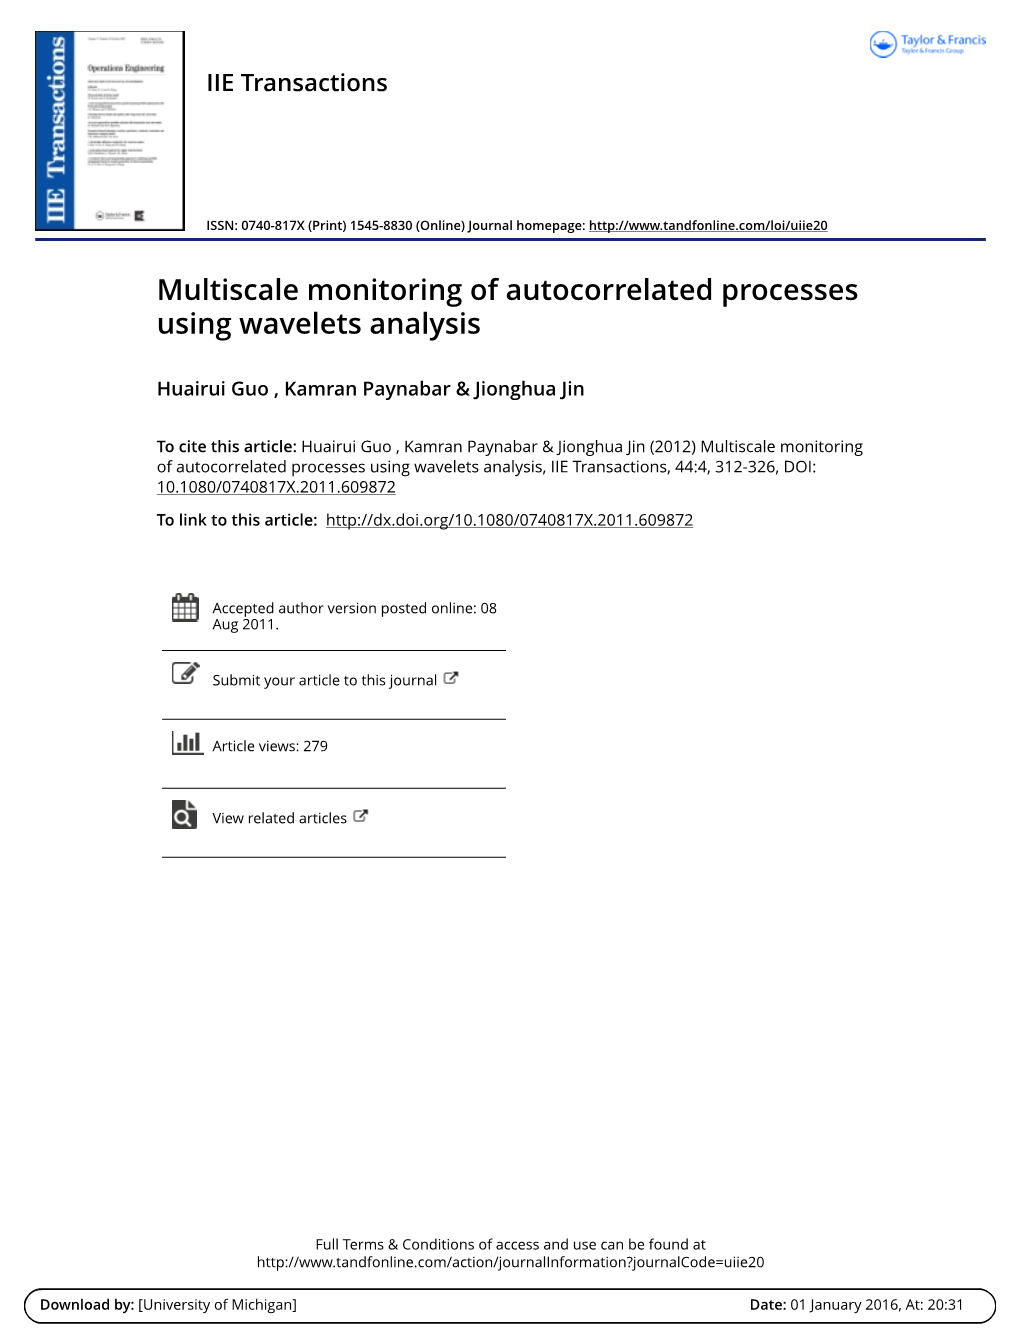 Multiscale Monitoring of Autocorrelated Processes Using Wavelets Analysis